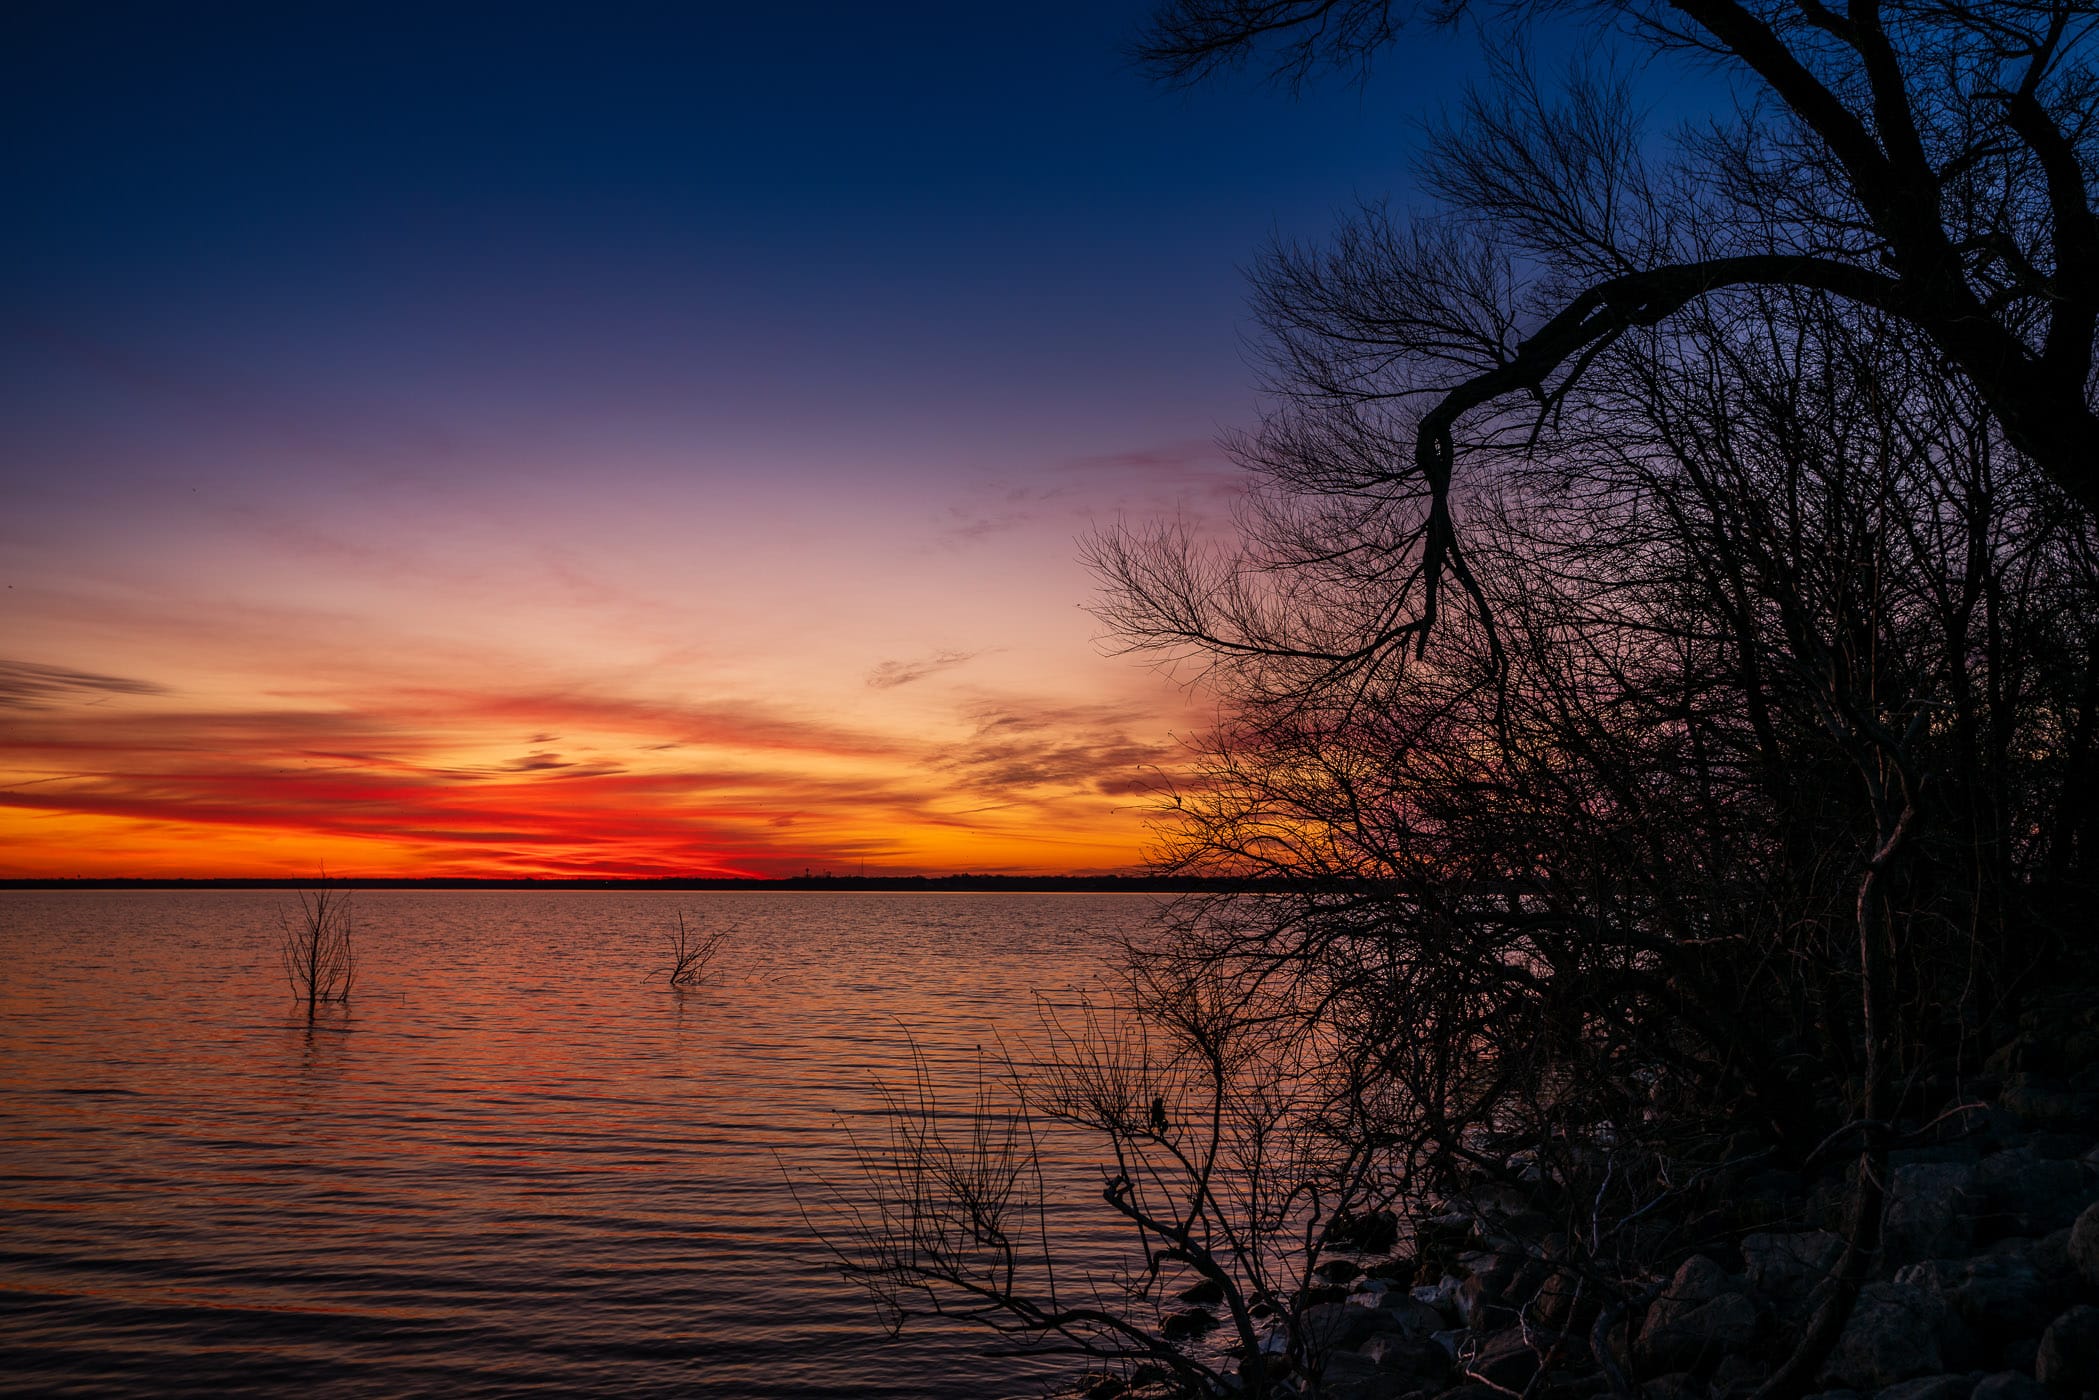 The sun rises on North Texas' Lake Lavon.